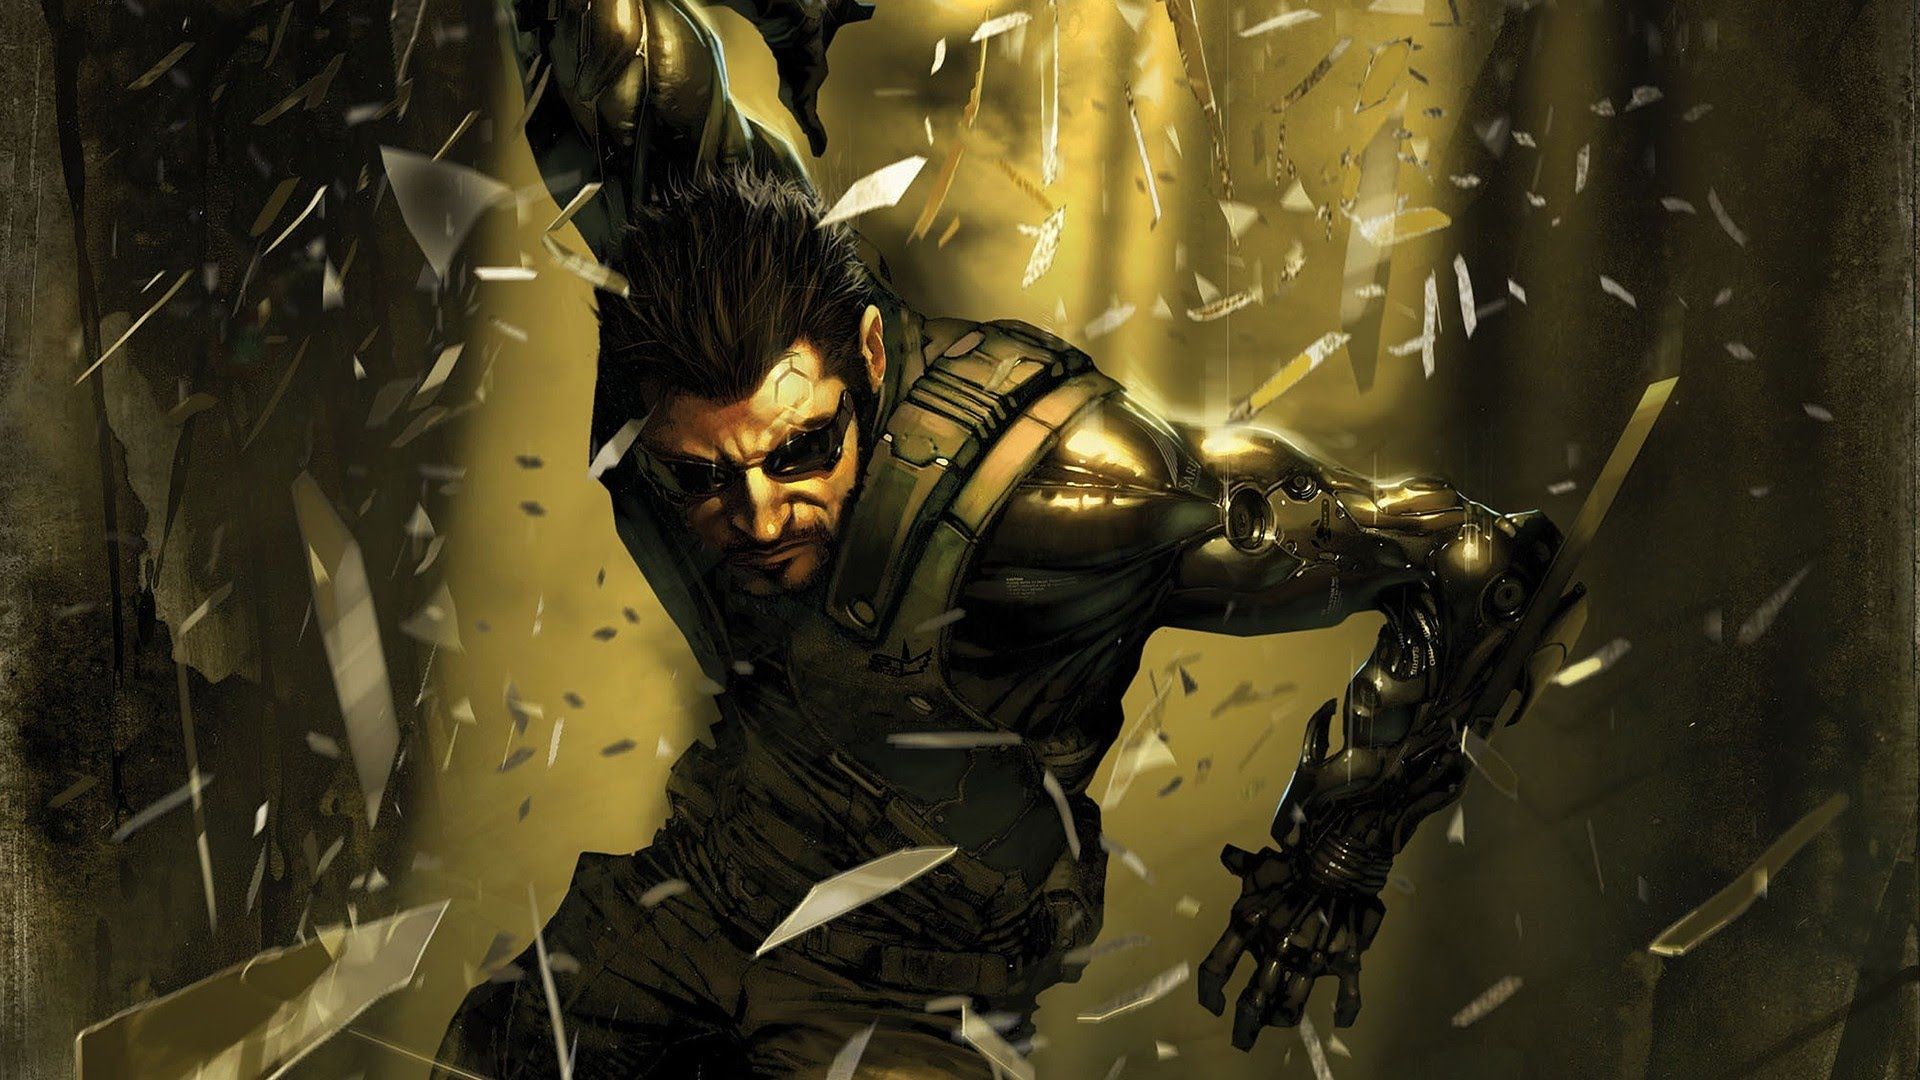 Deus Ex: Mankind Divided Wallpaper, Picture, Image